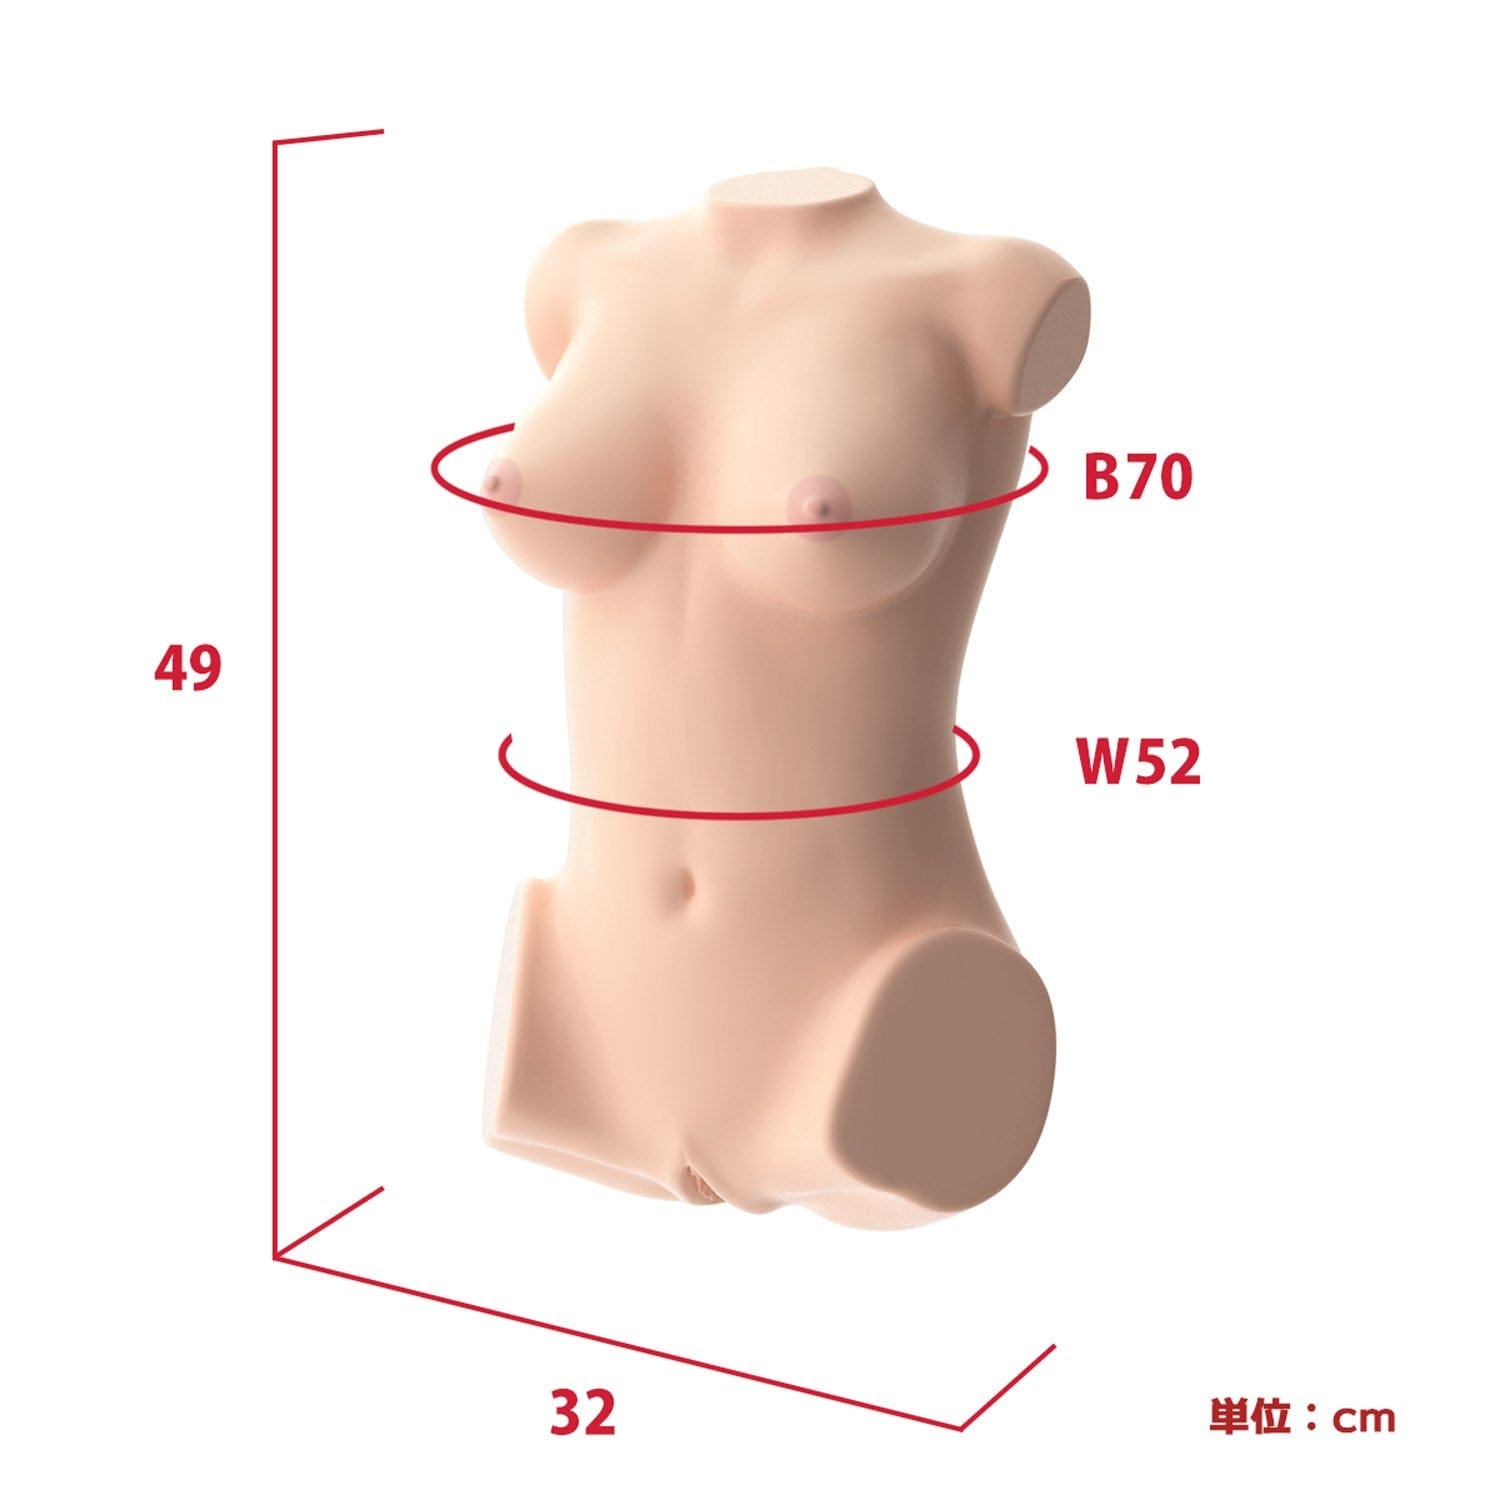 SSI Japan - Real Body 3D Bone System D Cup Yura Anekawa Masturbator Doll 11kg -  Doll  Durio.sg